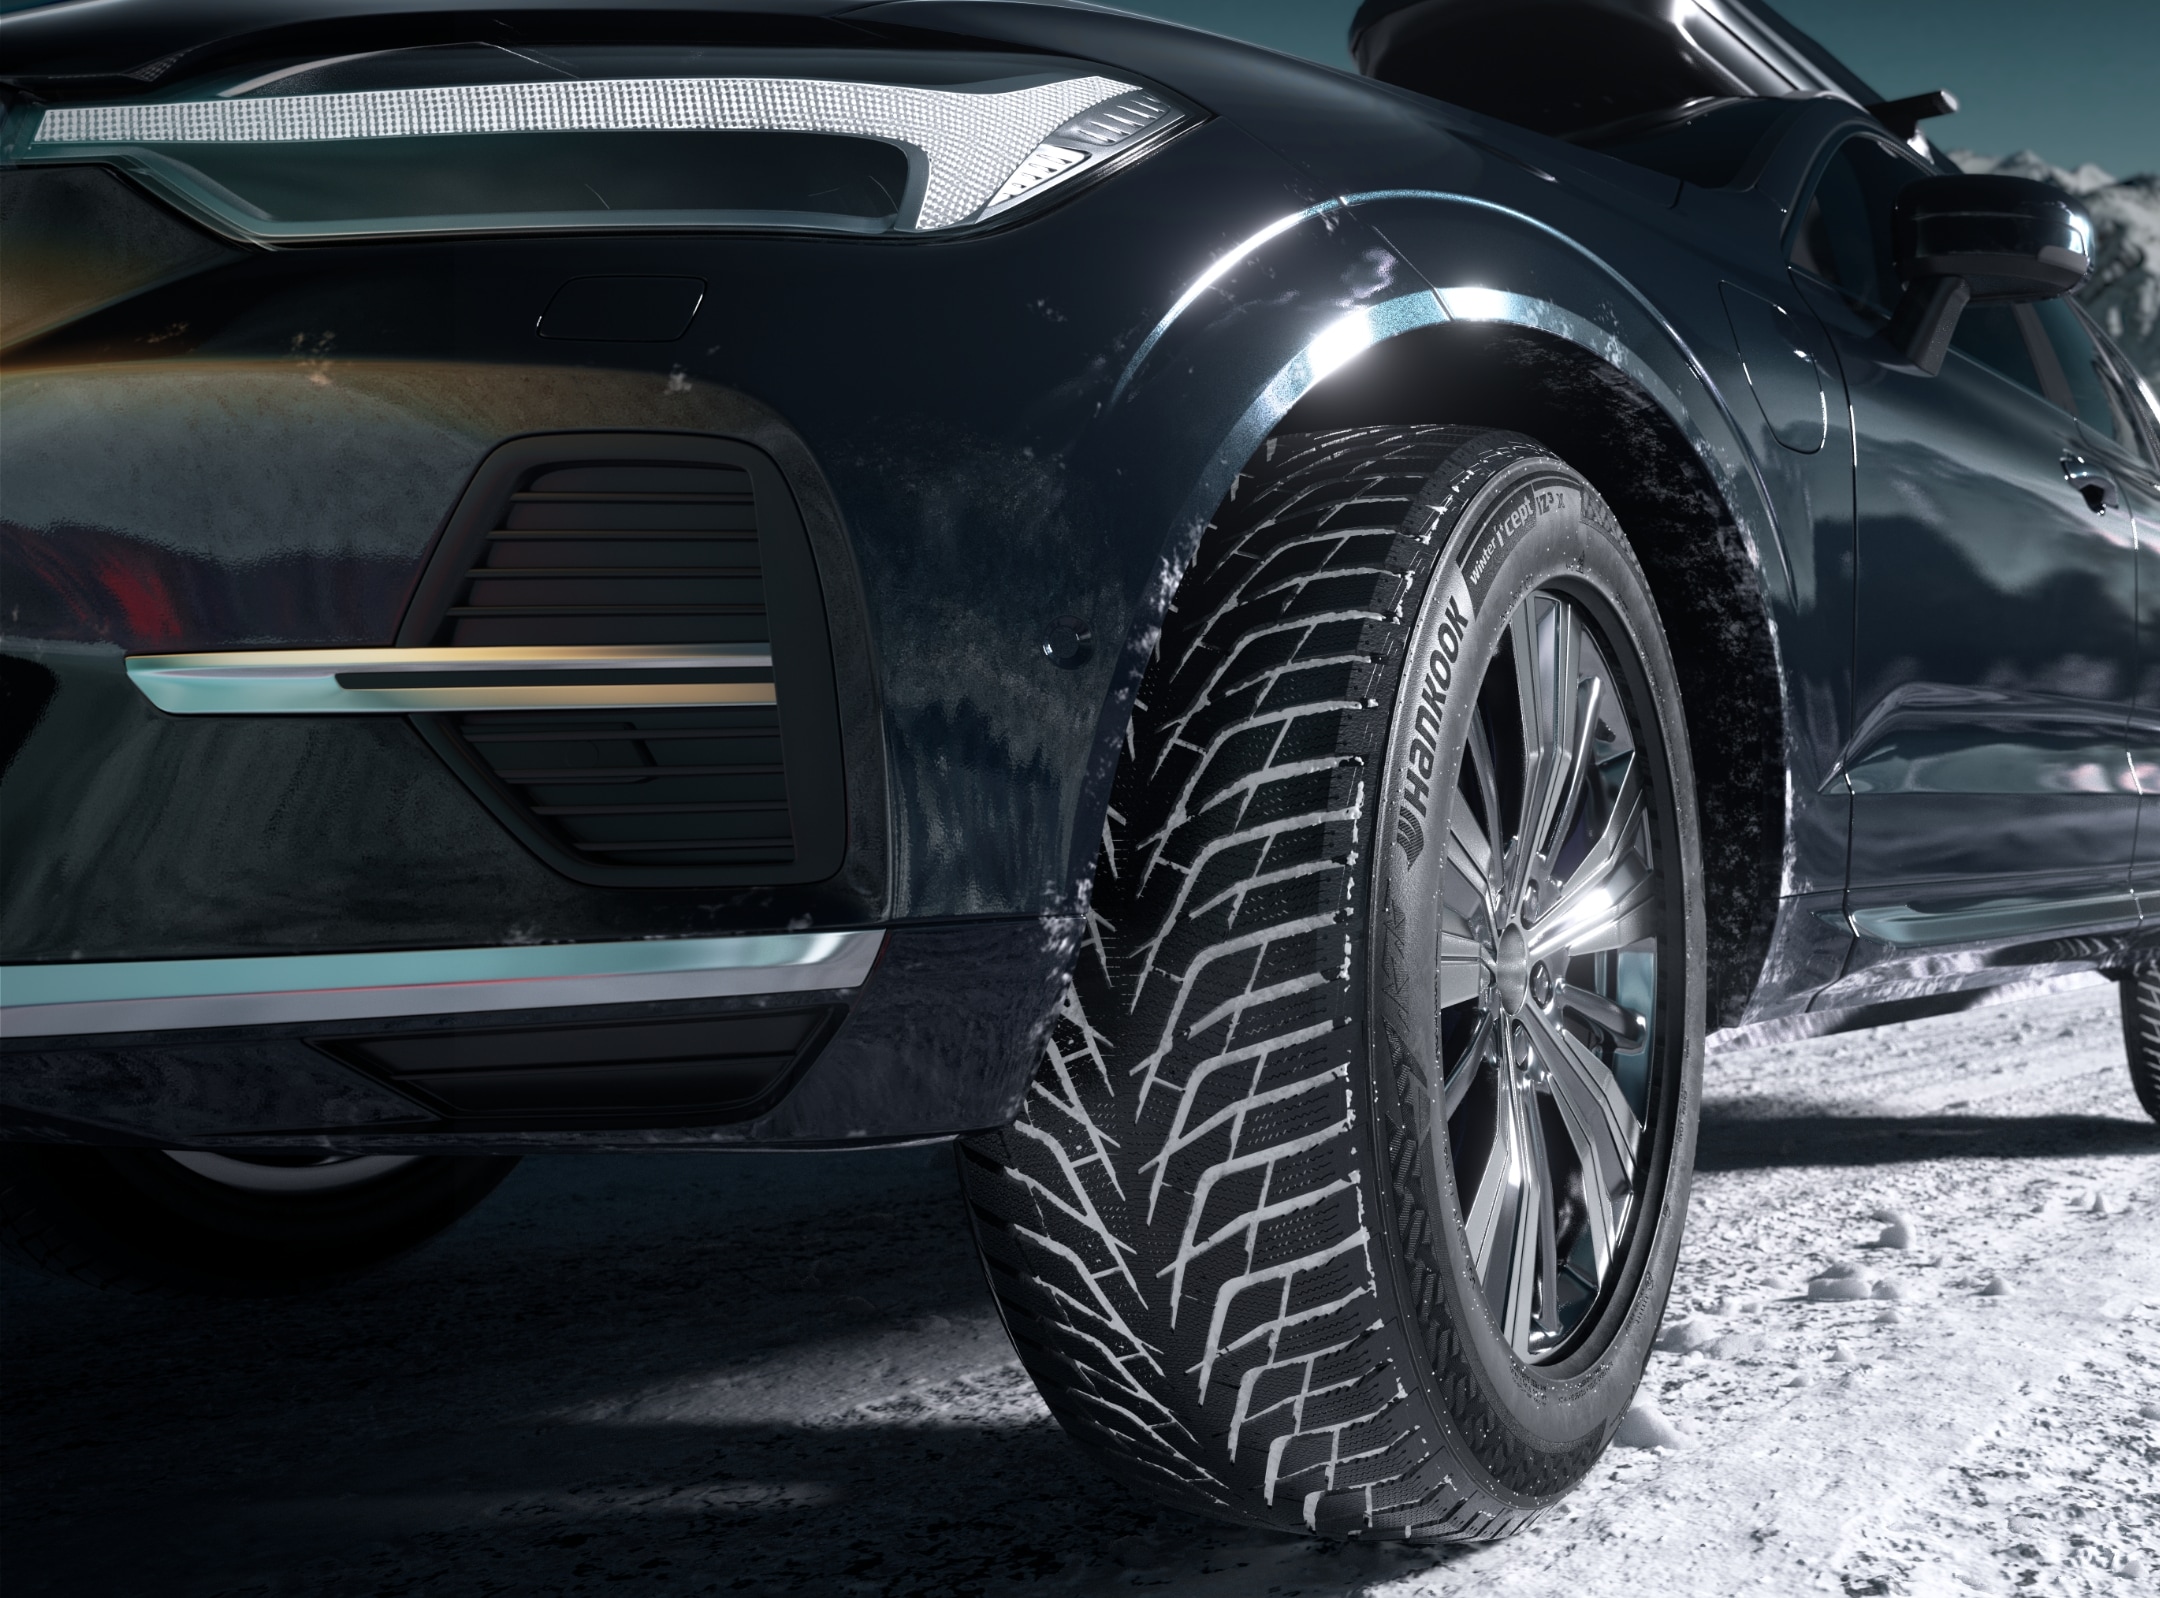 Winter i cept iZ3 X - Winter i cept | Hankook Tire USA